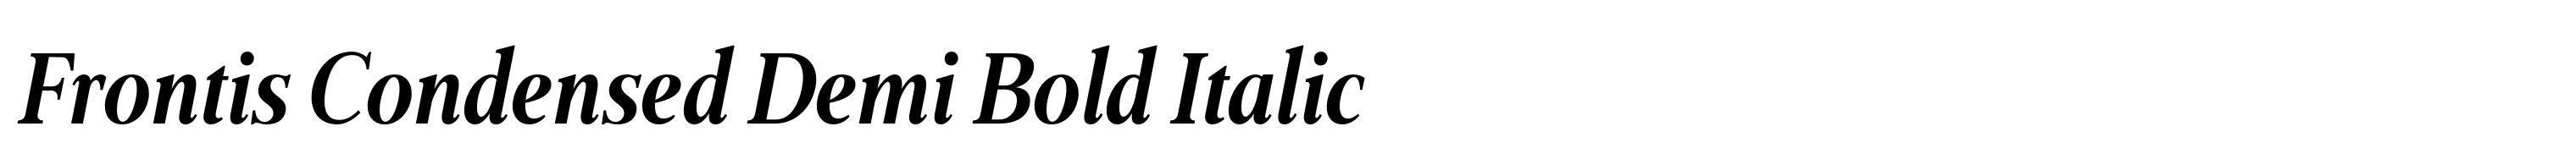 Frontis Condensed Demi Bold Italic